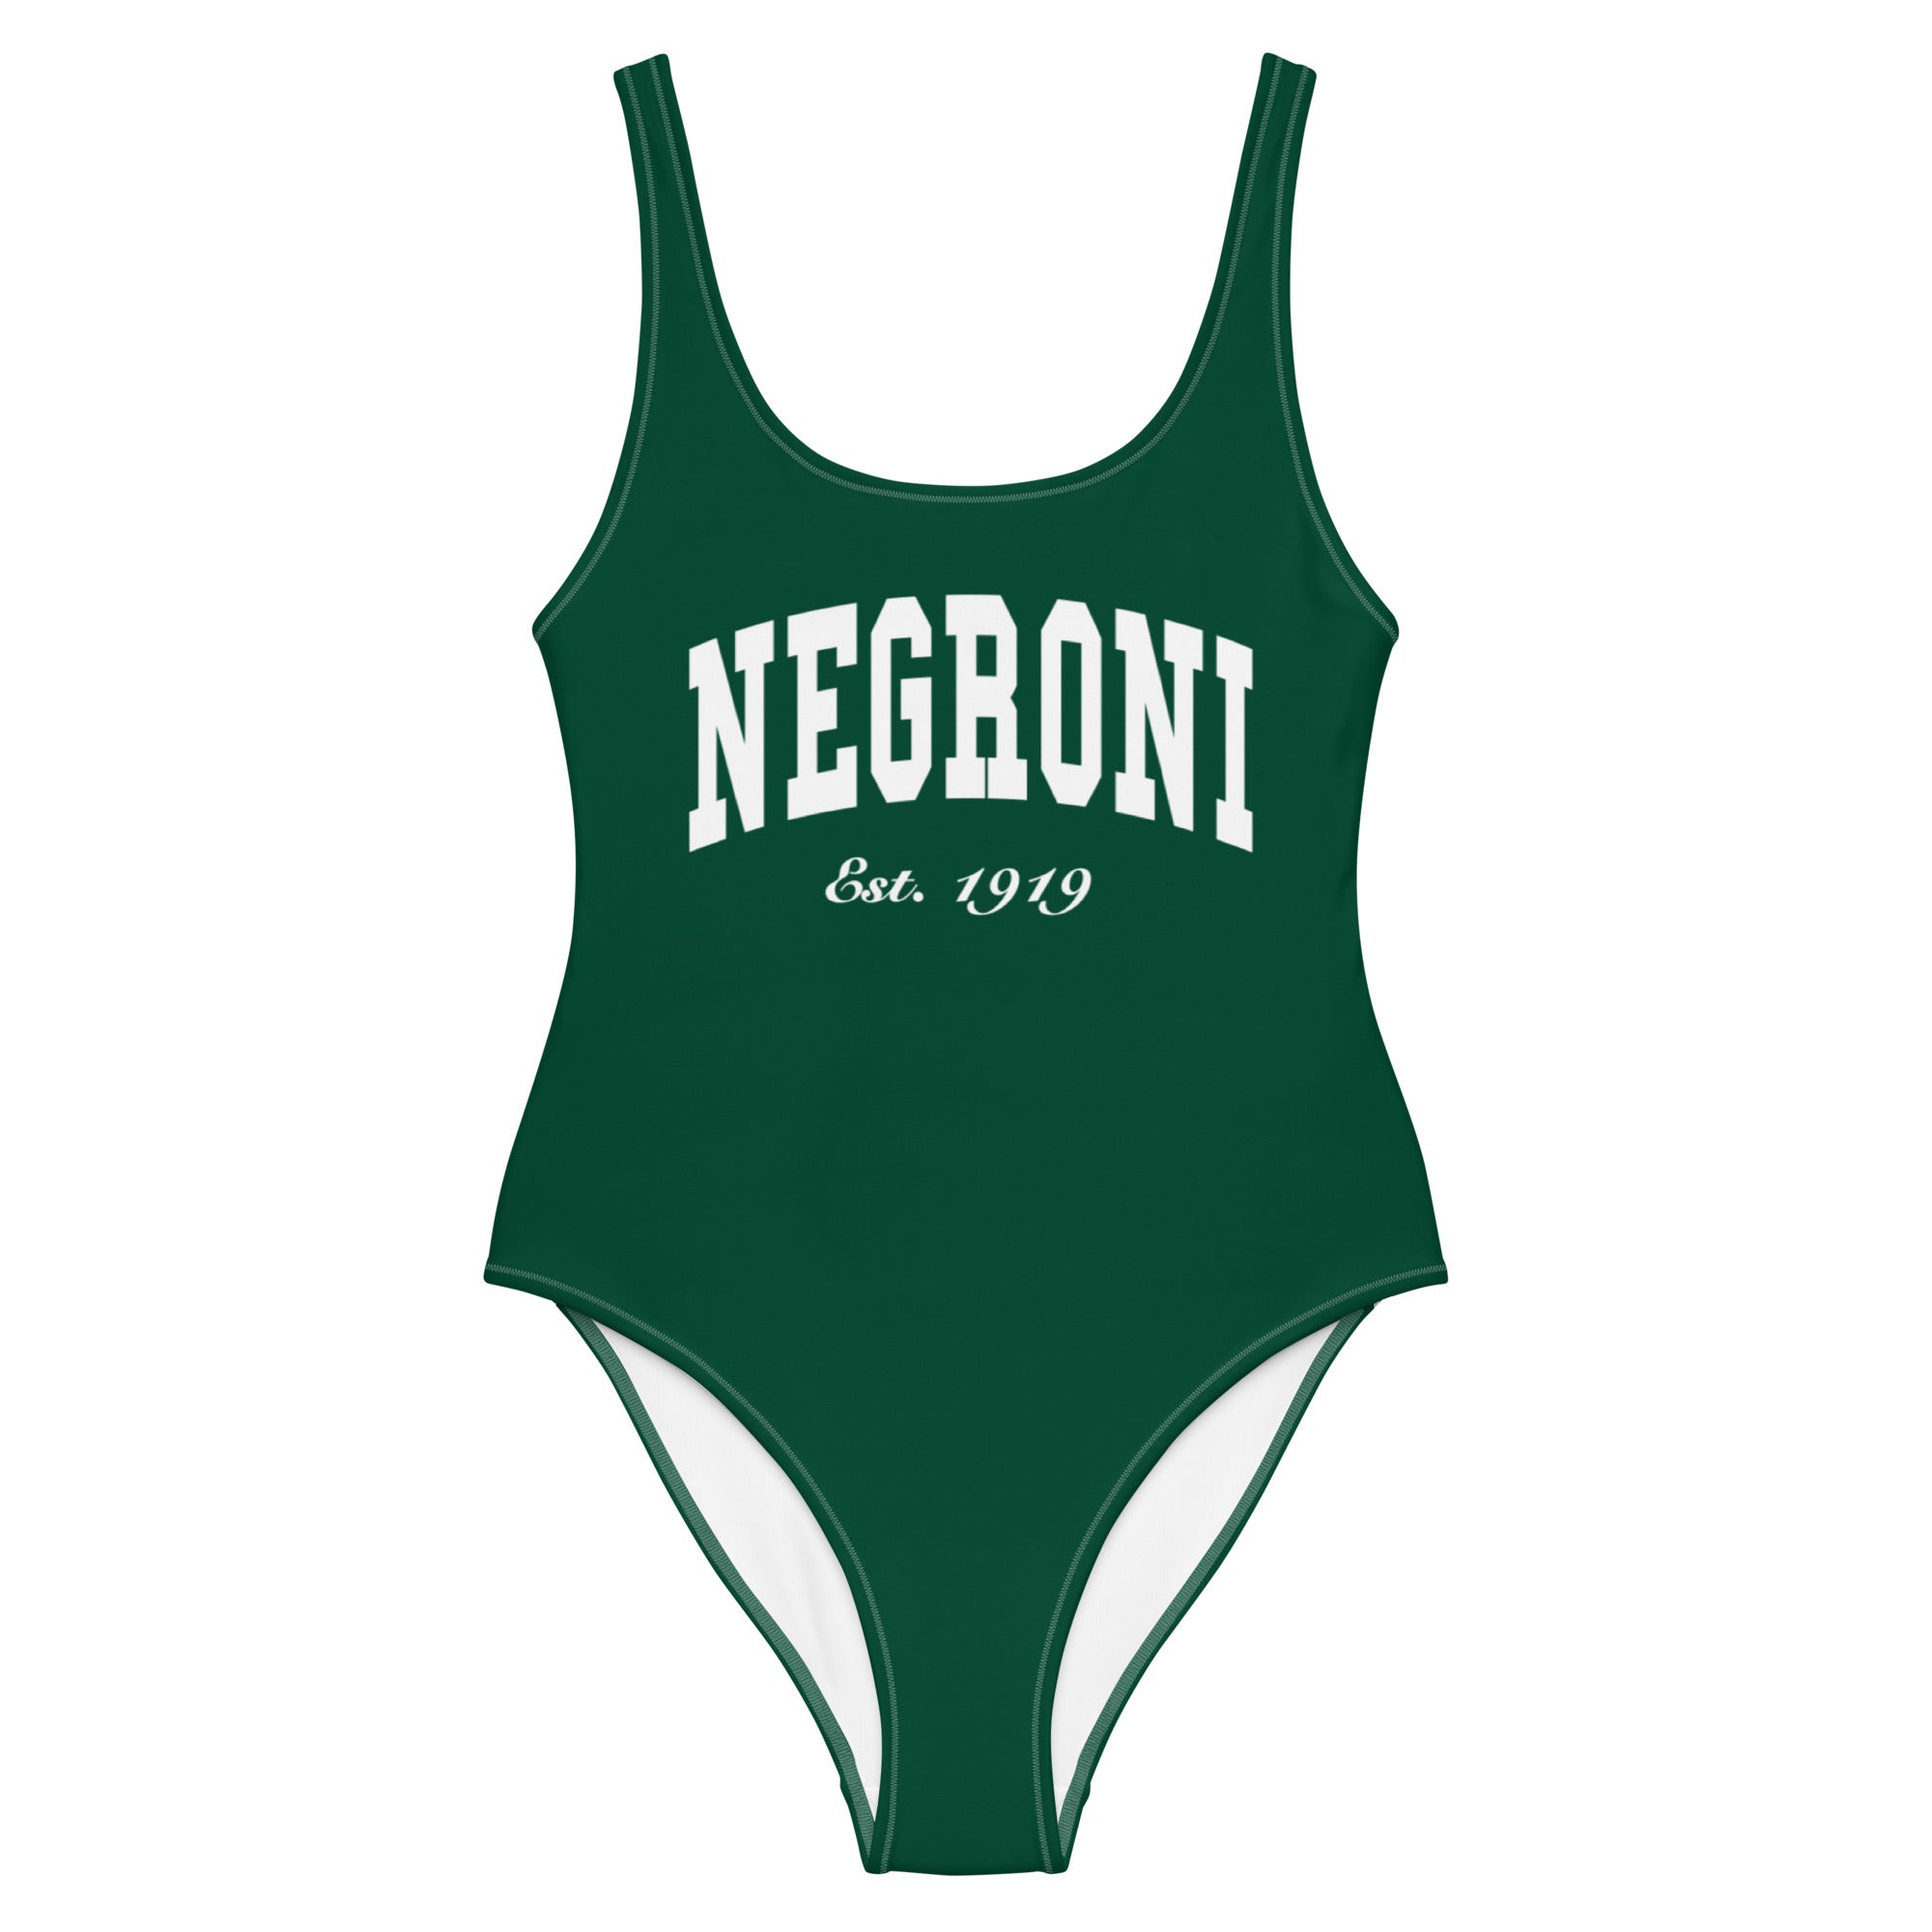 Negroni Est. 1919 - Swimsuit - The Refined Spirit